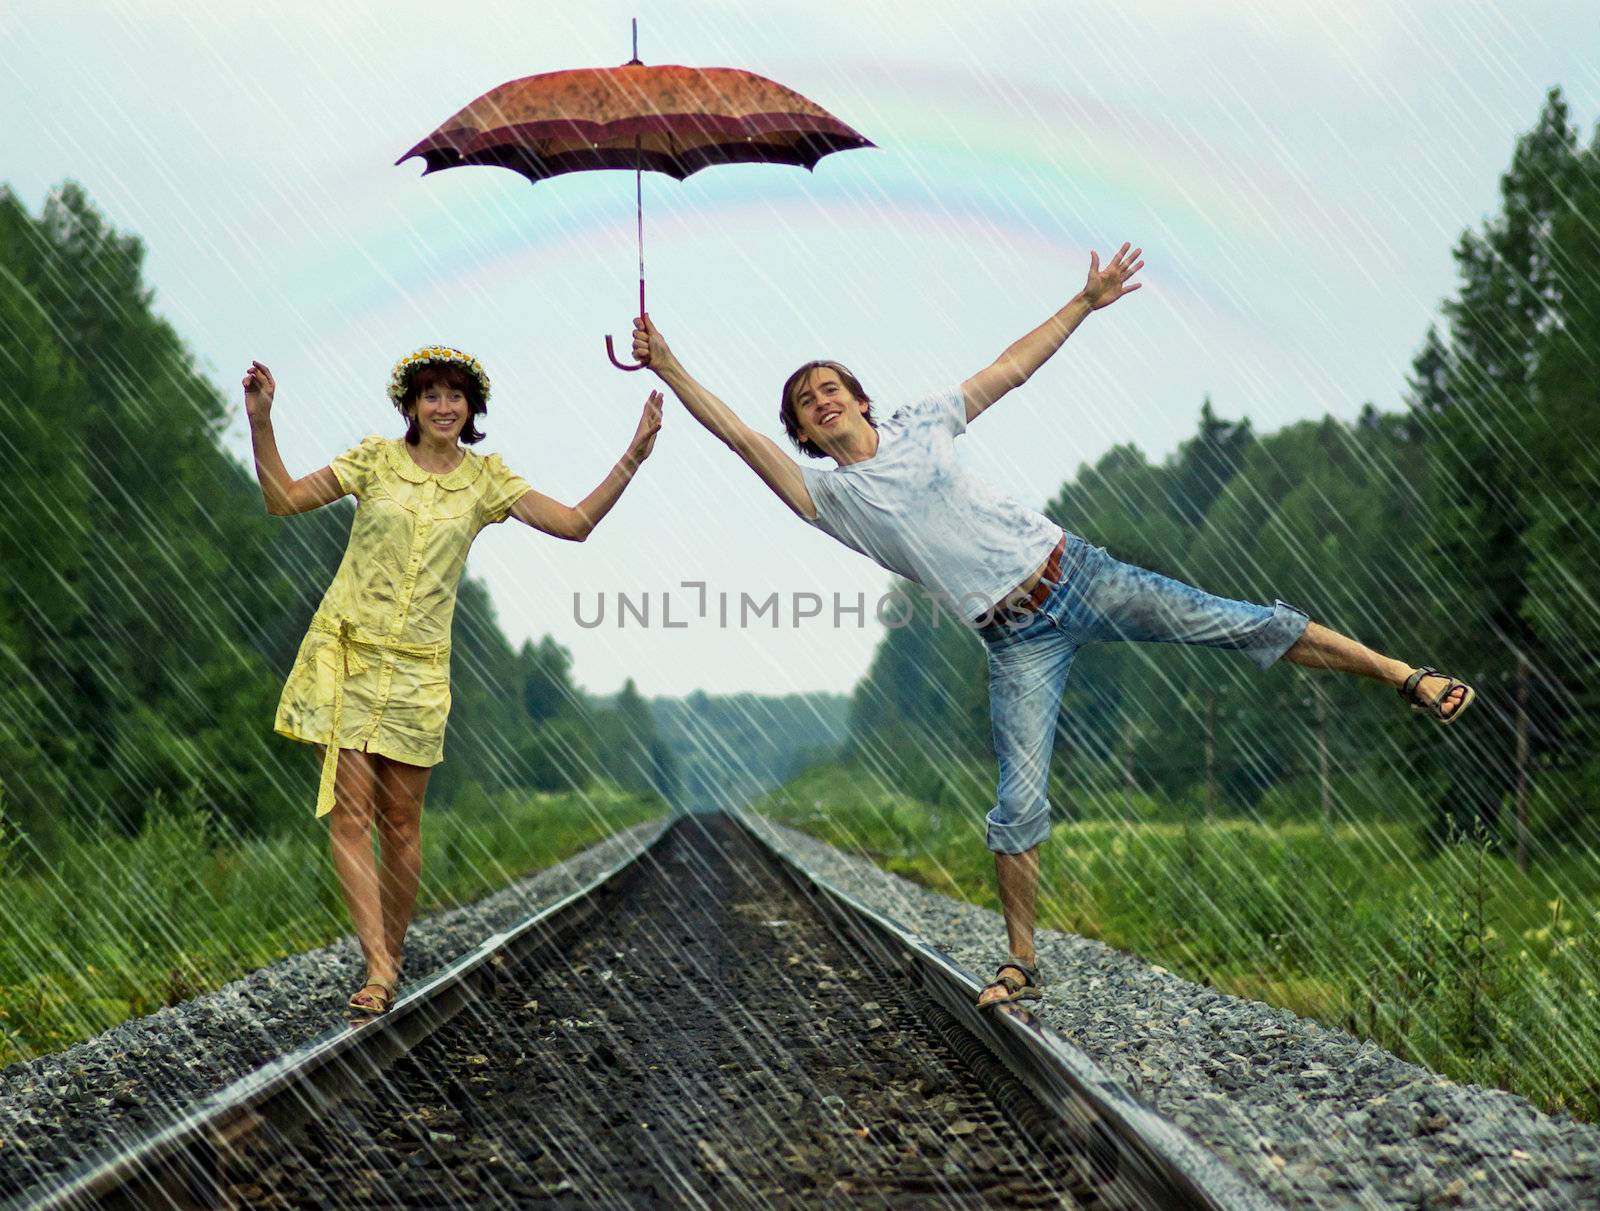 Couple under rain by Axel80